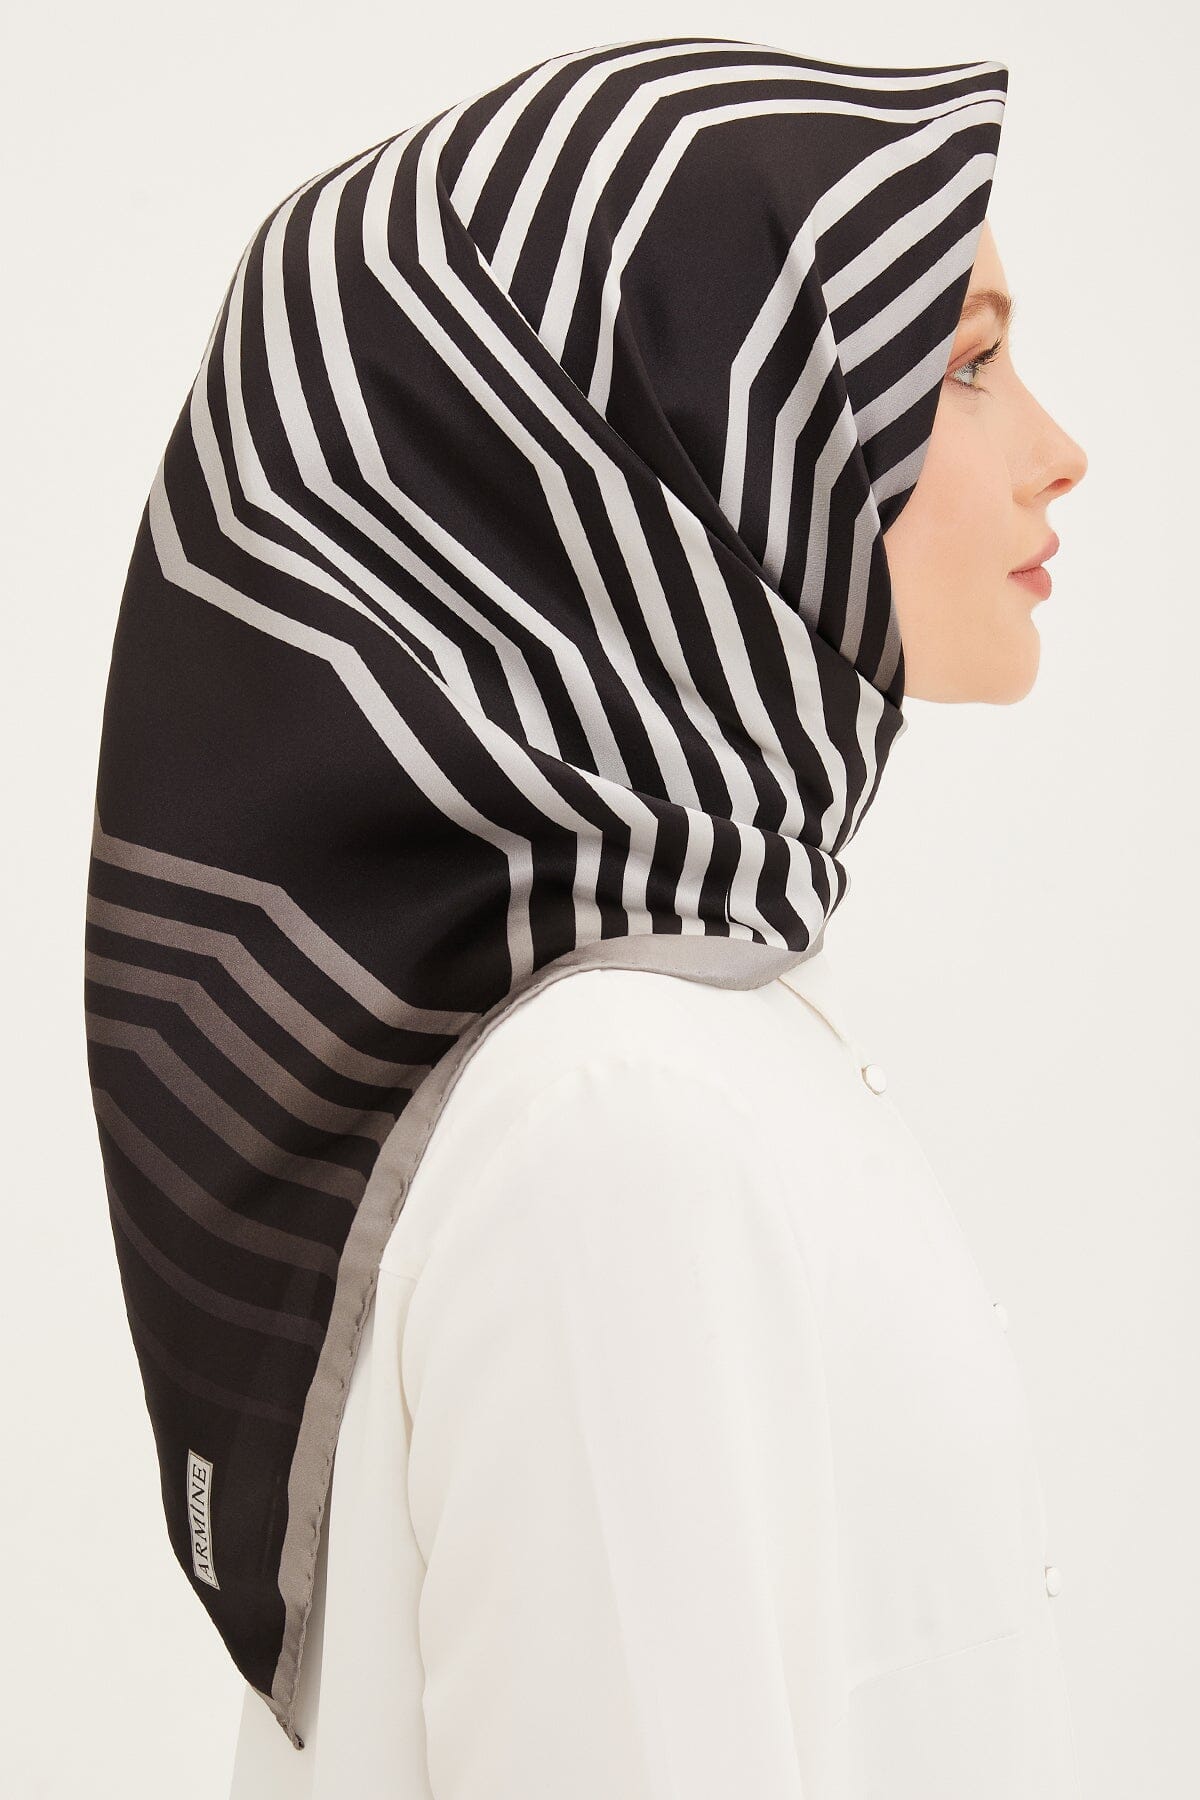 Armine Elyssa Square Silk Scarf #6 Silk Hijabs,Armine Armine 